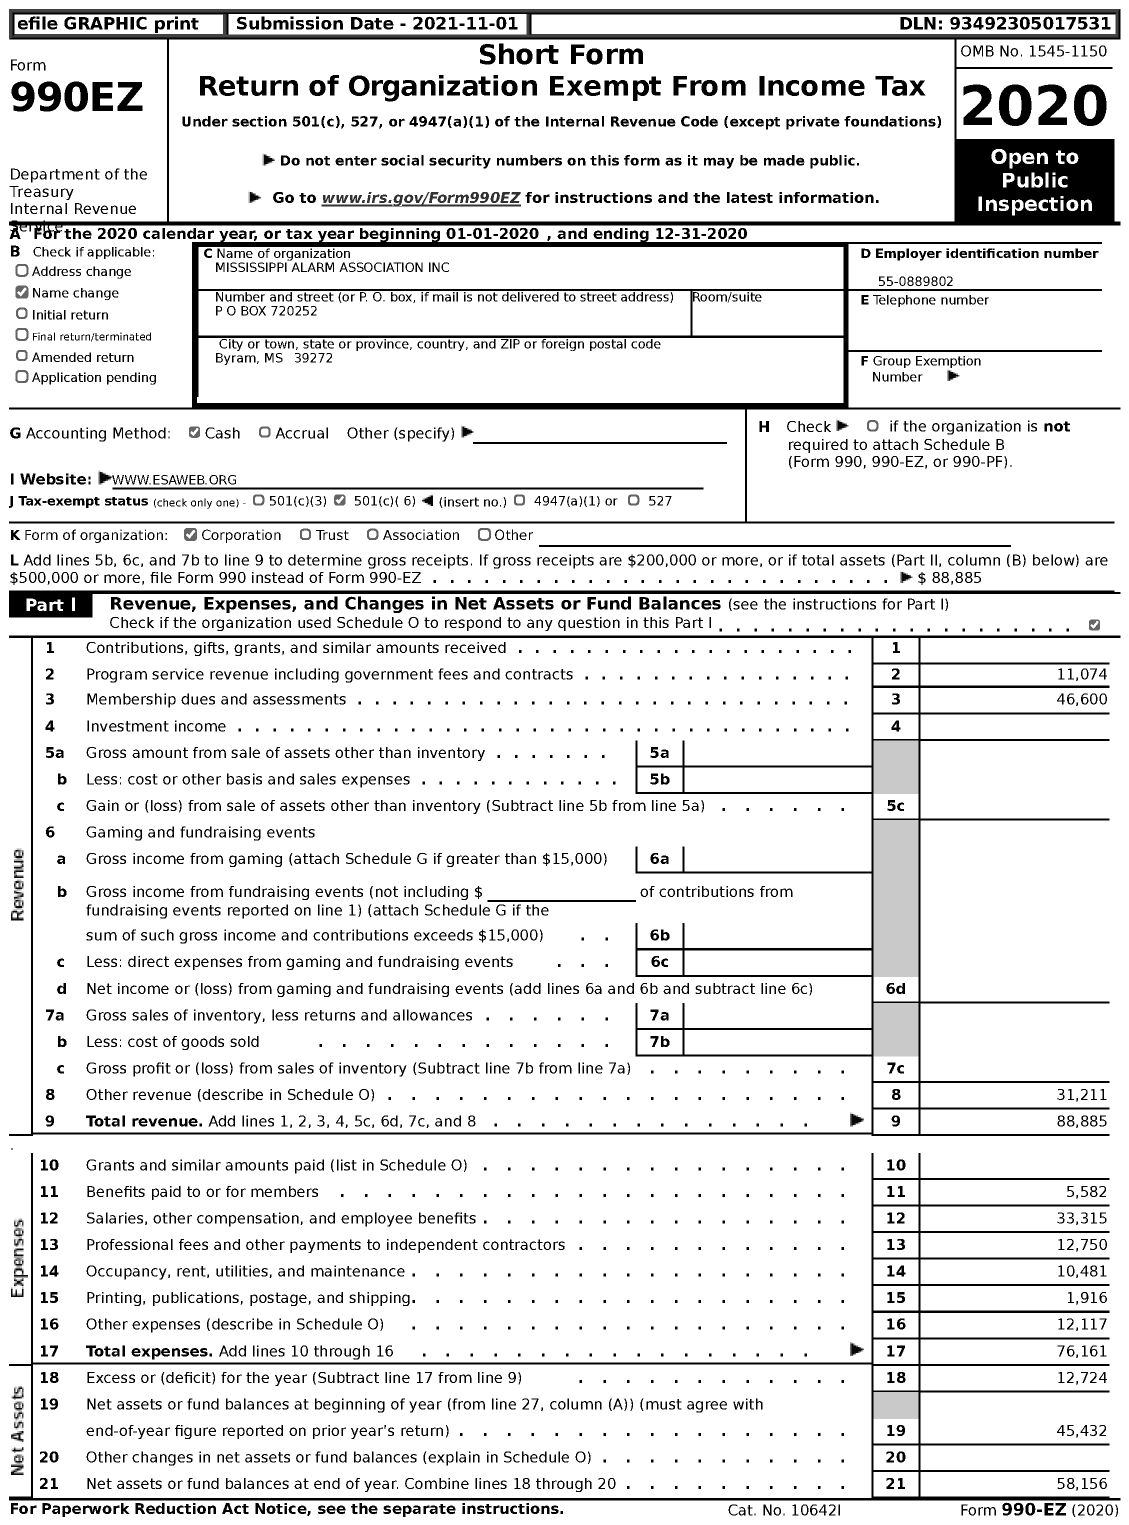 Image of first page of 2020 Form 990EZ for Mississippi Alarm Asssociation